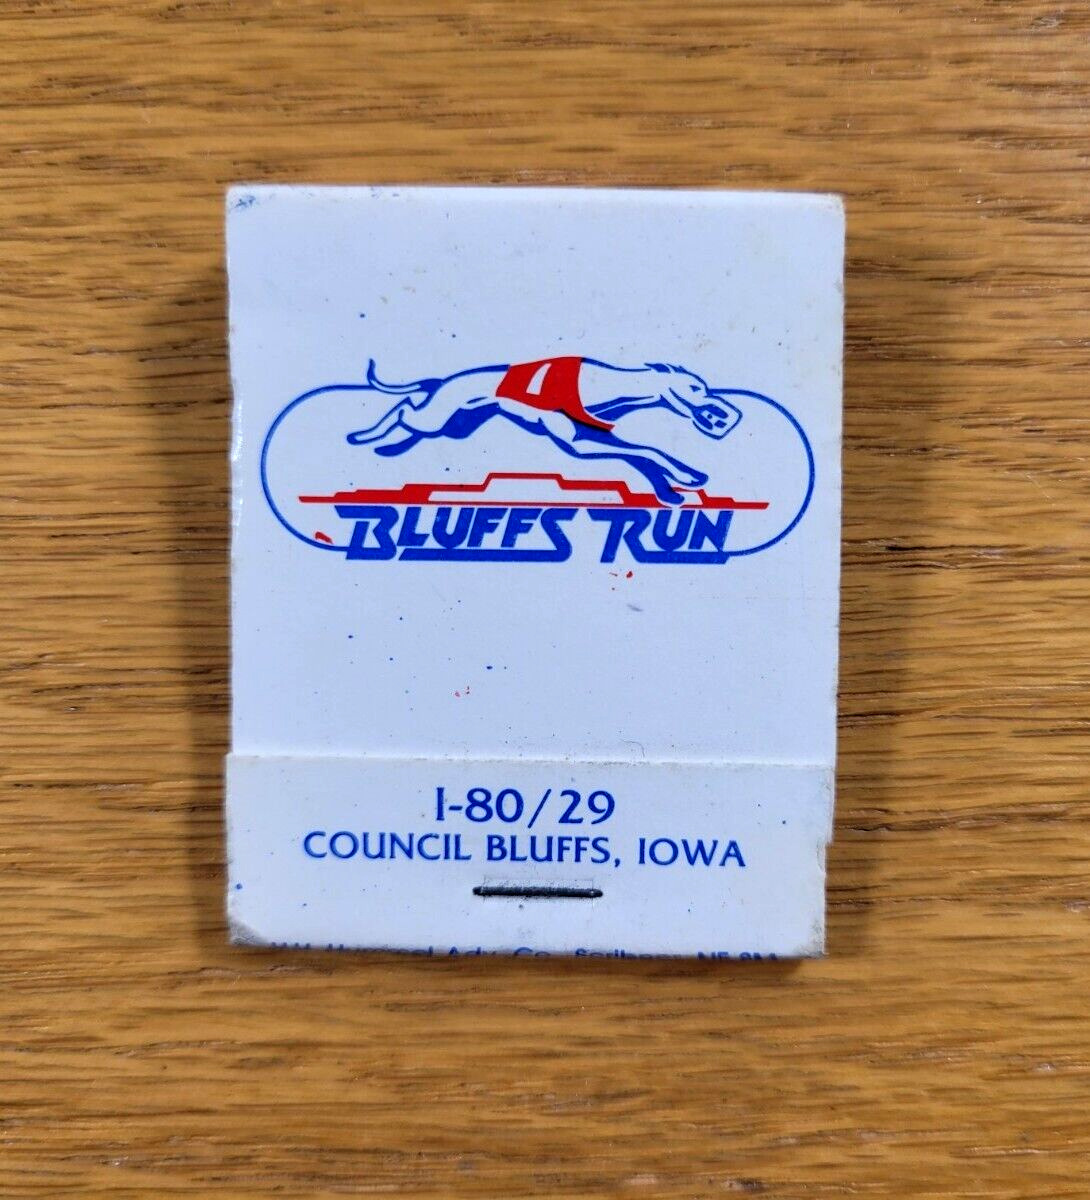 BLUFFS RUN in Council Bluffs, Iowa Vintage Full Unused Matchbook Matches